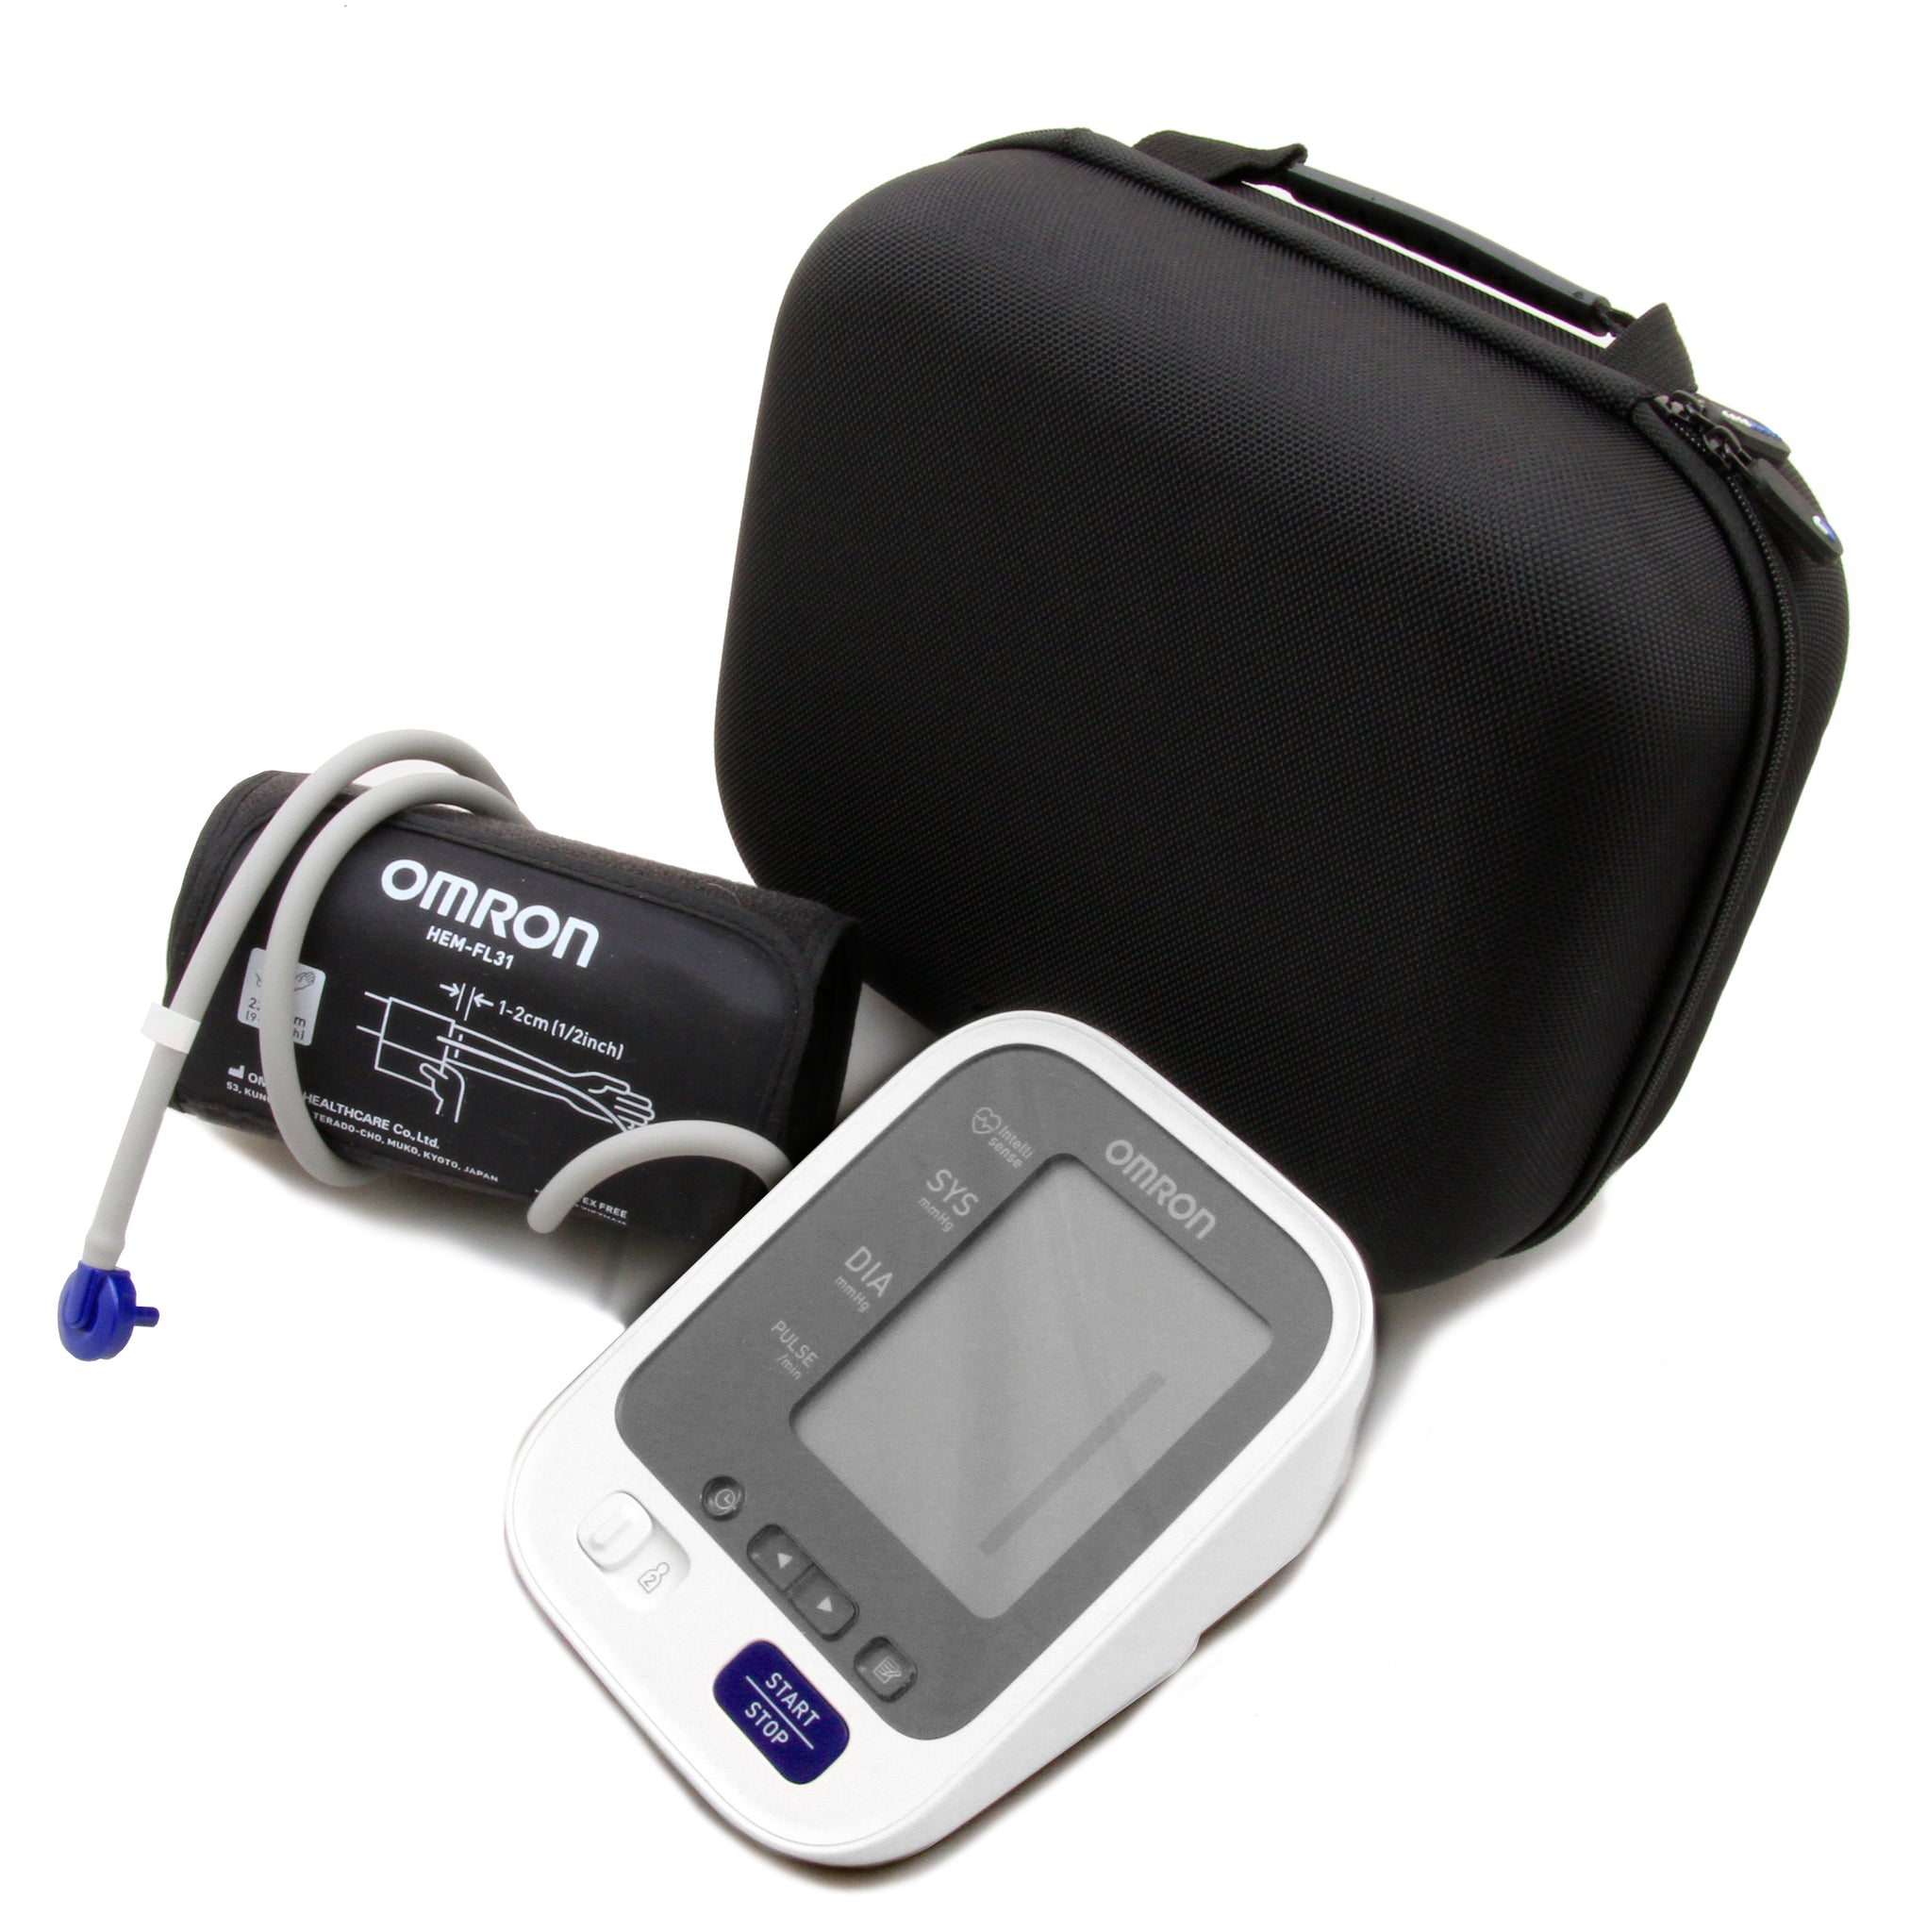  Omron 7 Series Upper Arm Blood Pressure Monitor; 2